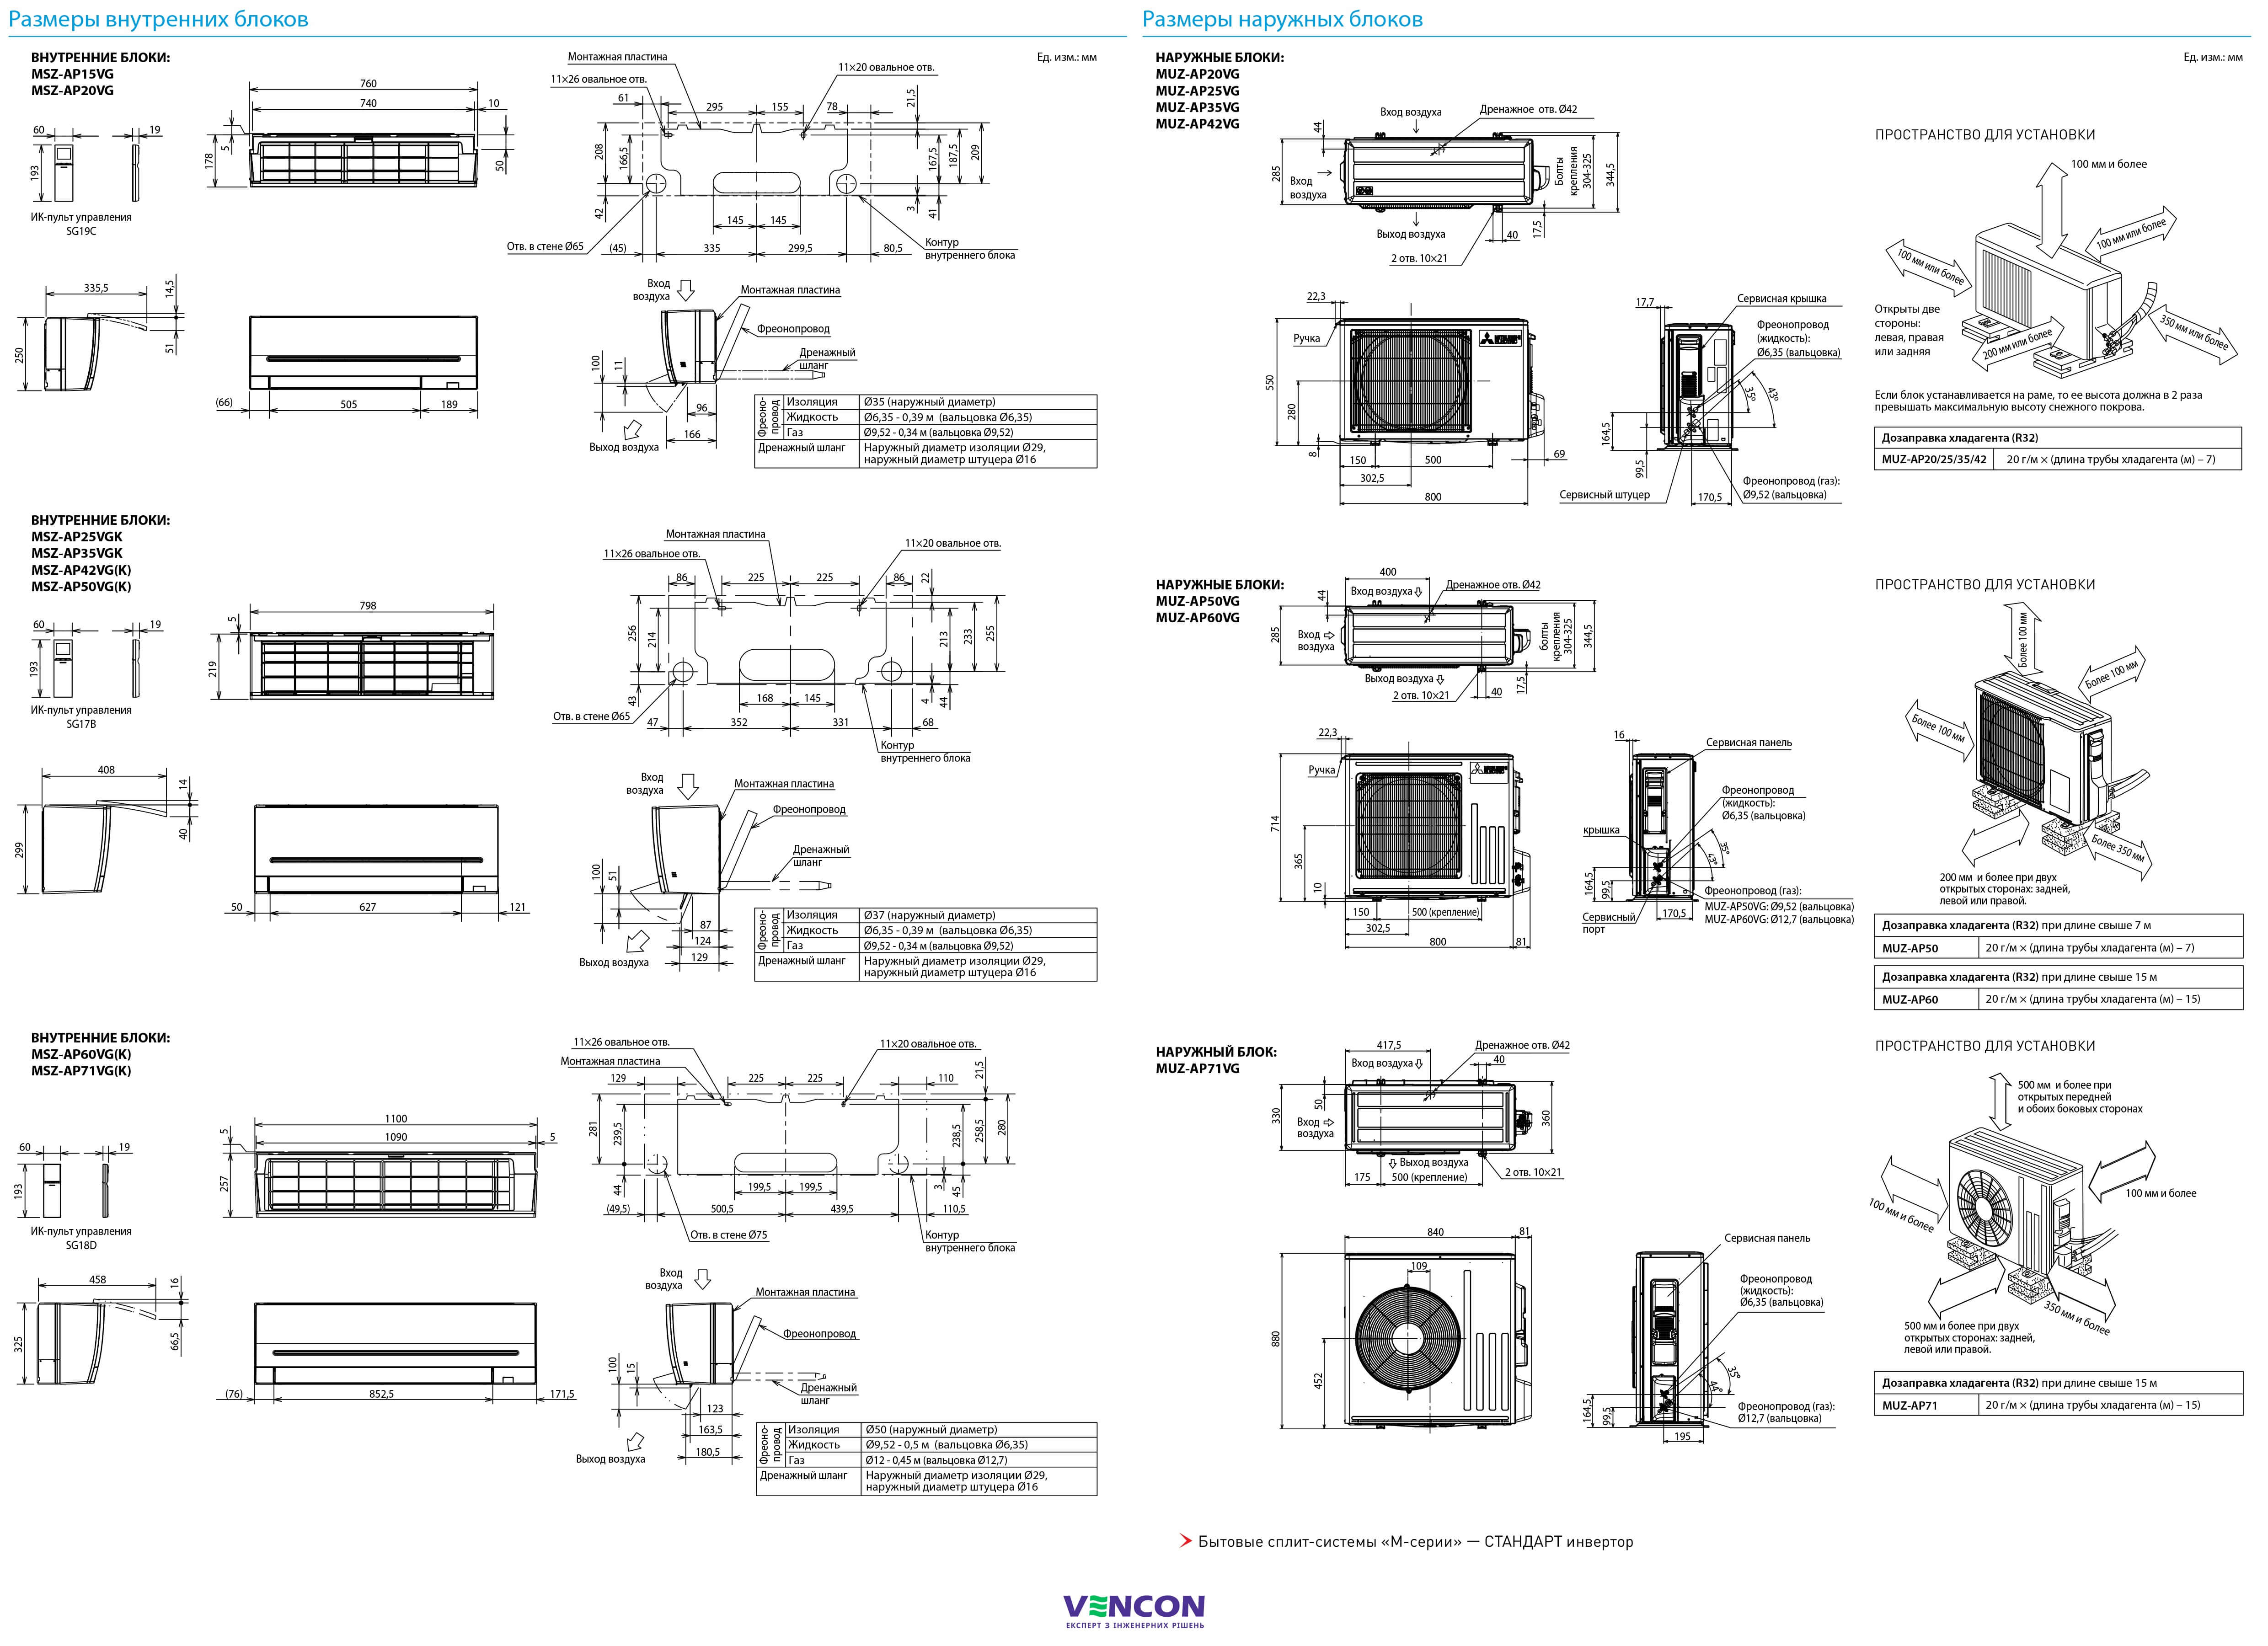 Mitsubishi Electric Standard Inverter MSZ-AP60VGK/MUZ-AP60VG Габаритные размеры